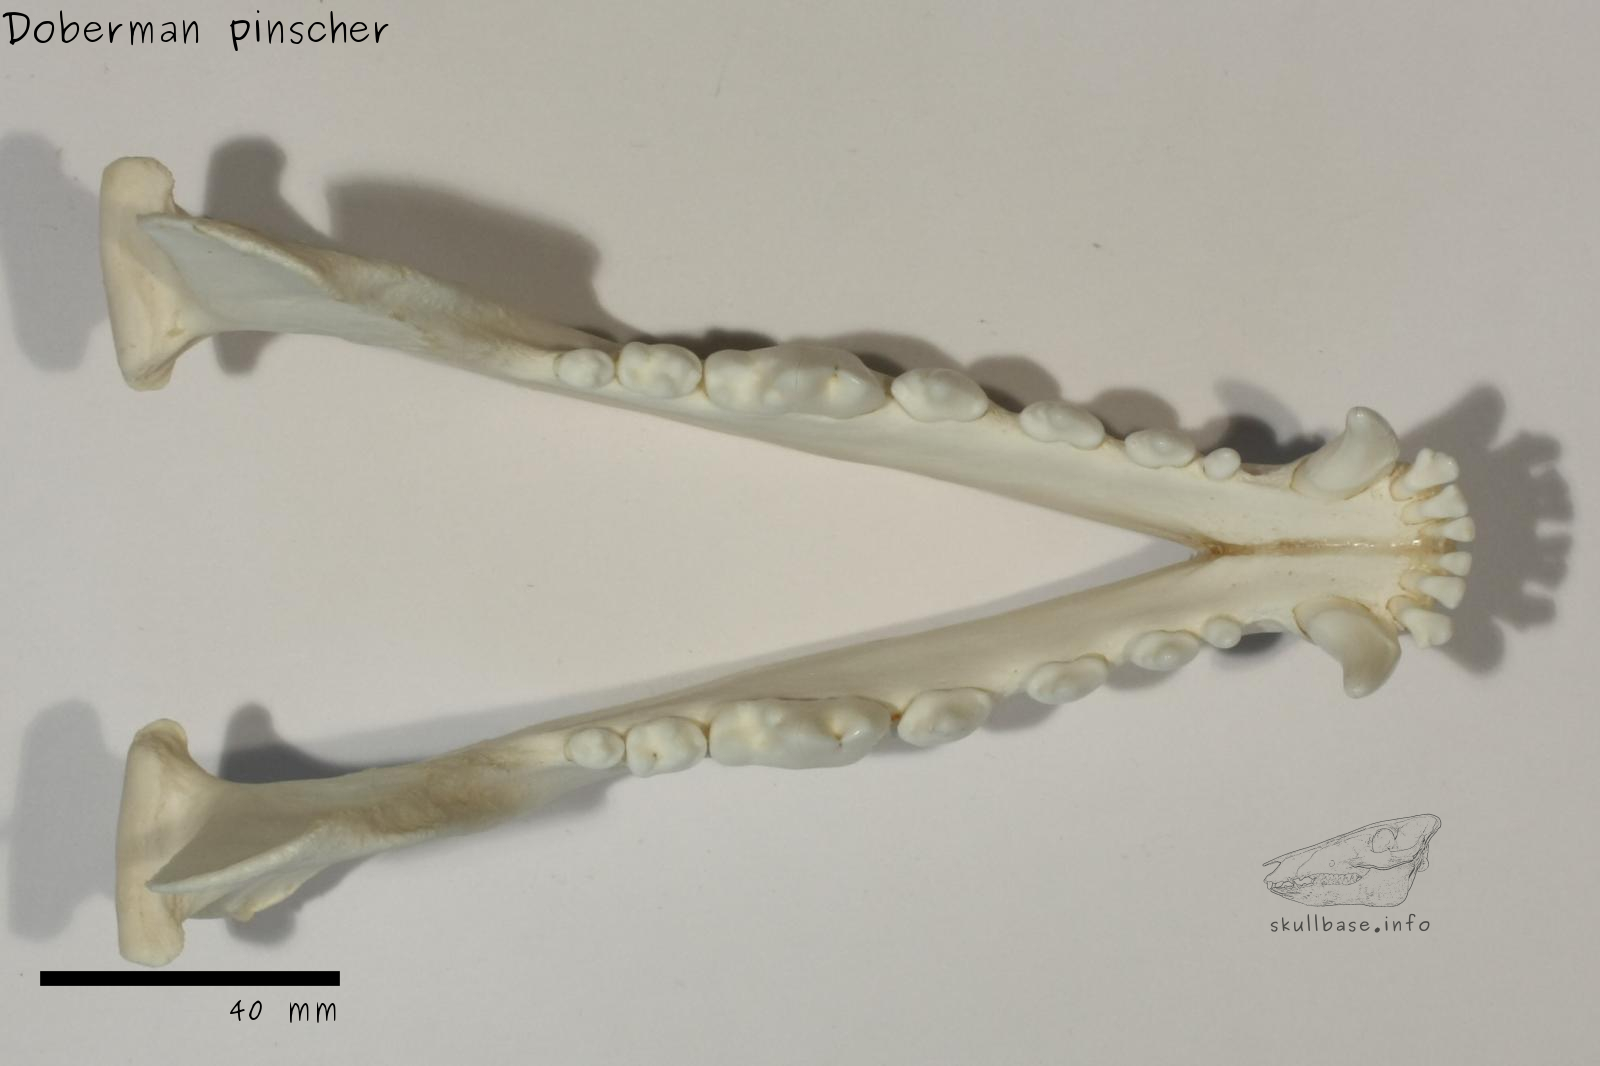 Doberman pinscher (Canis lupus familiaris) jaw